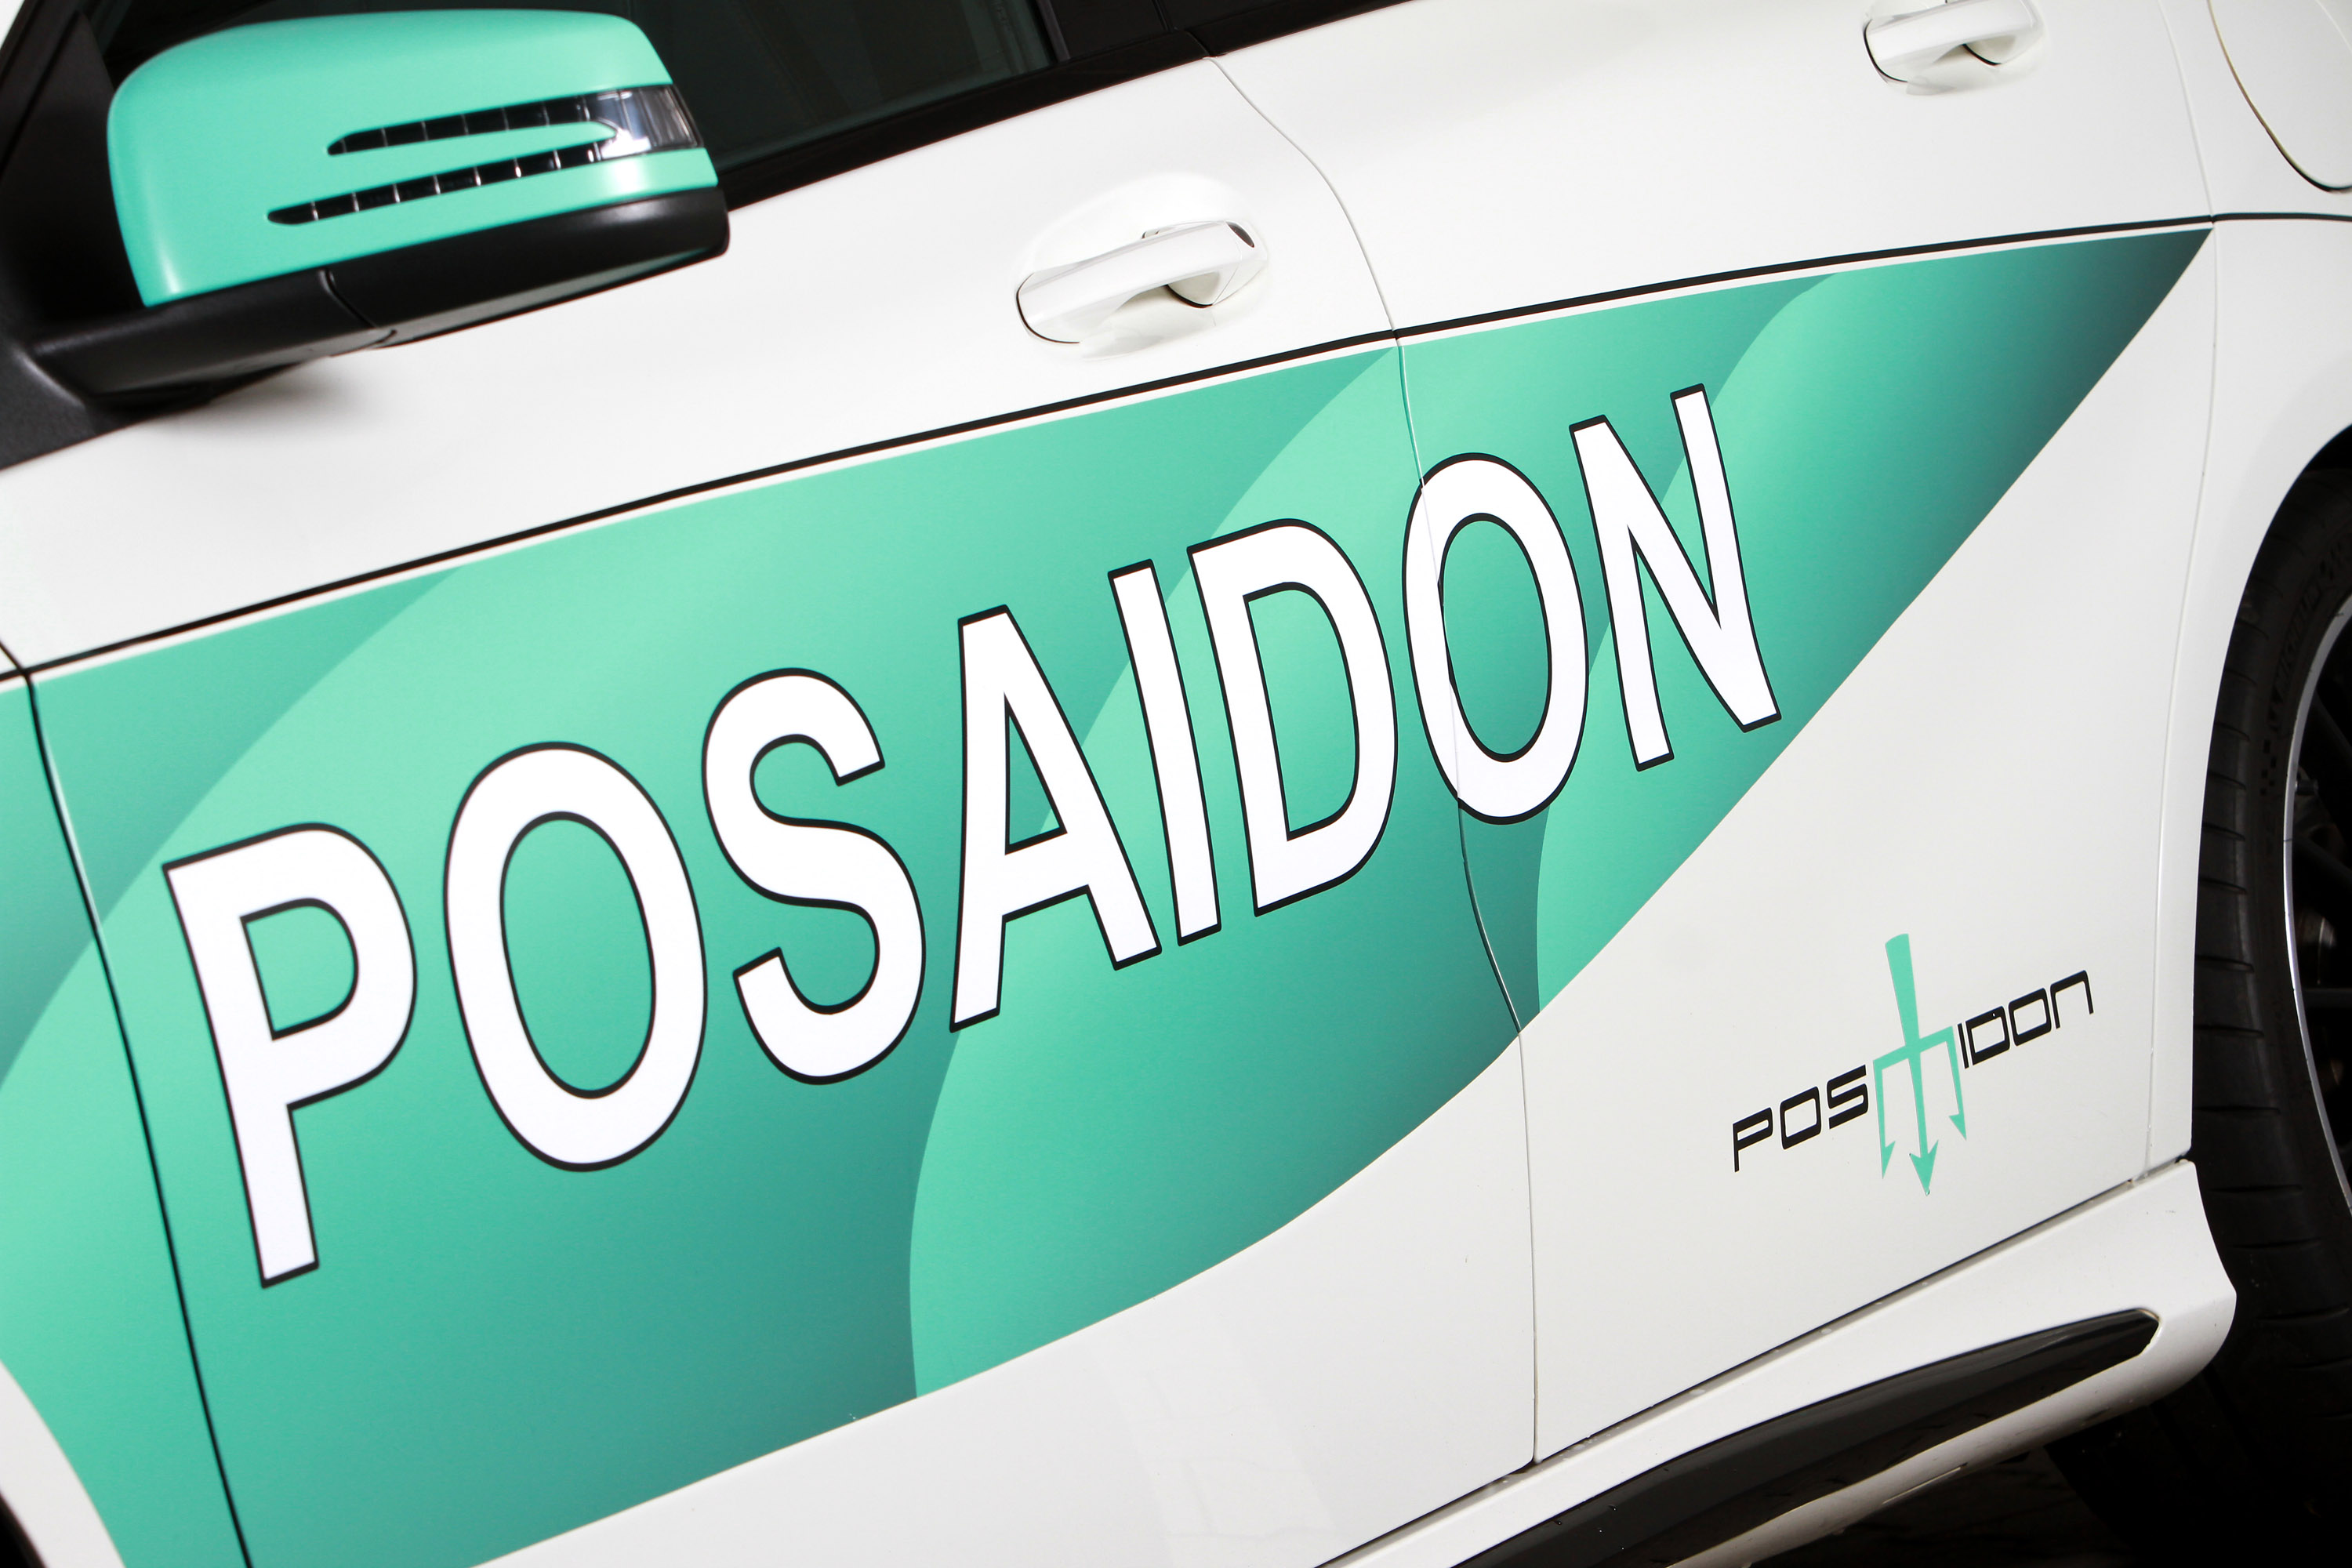 POSAIDON Mercedes-AMG A45 RS485+